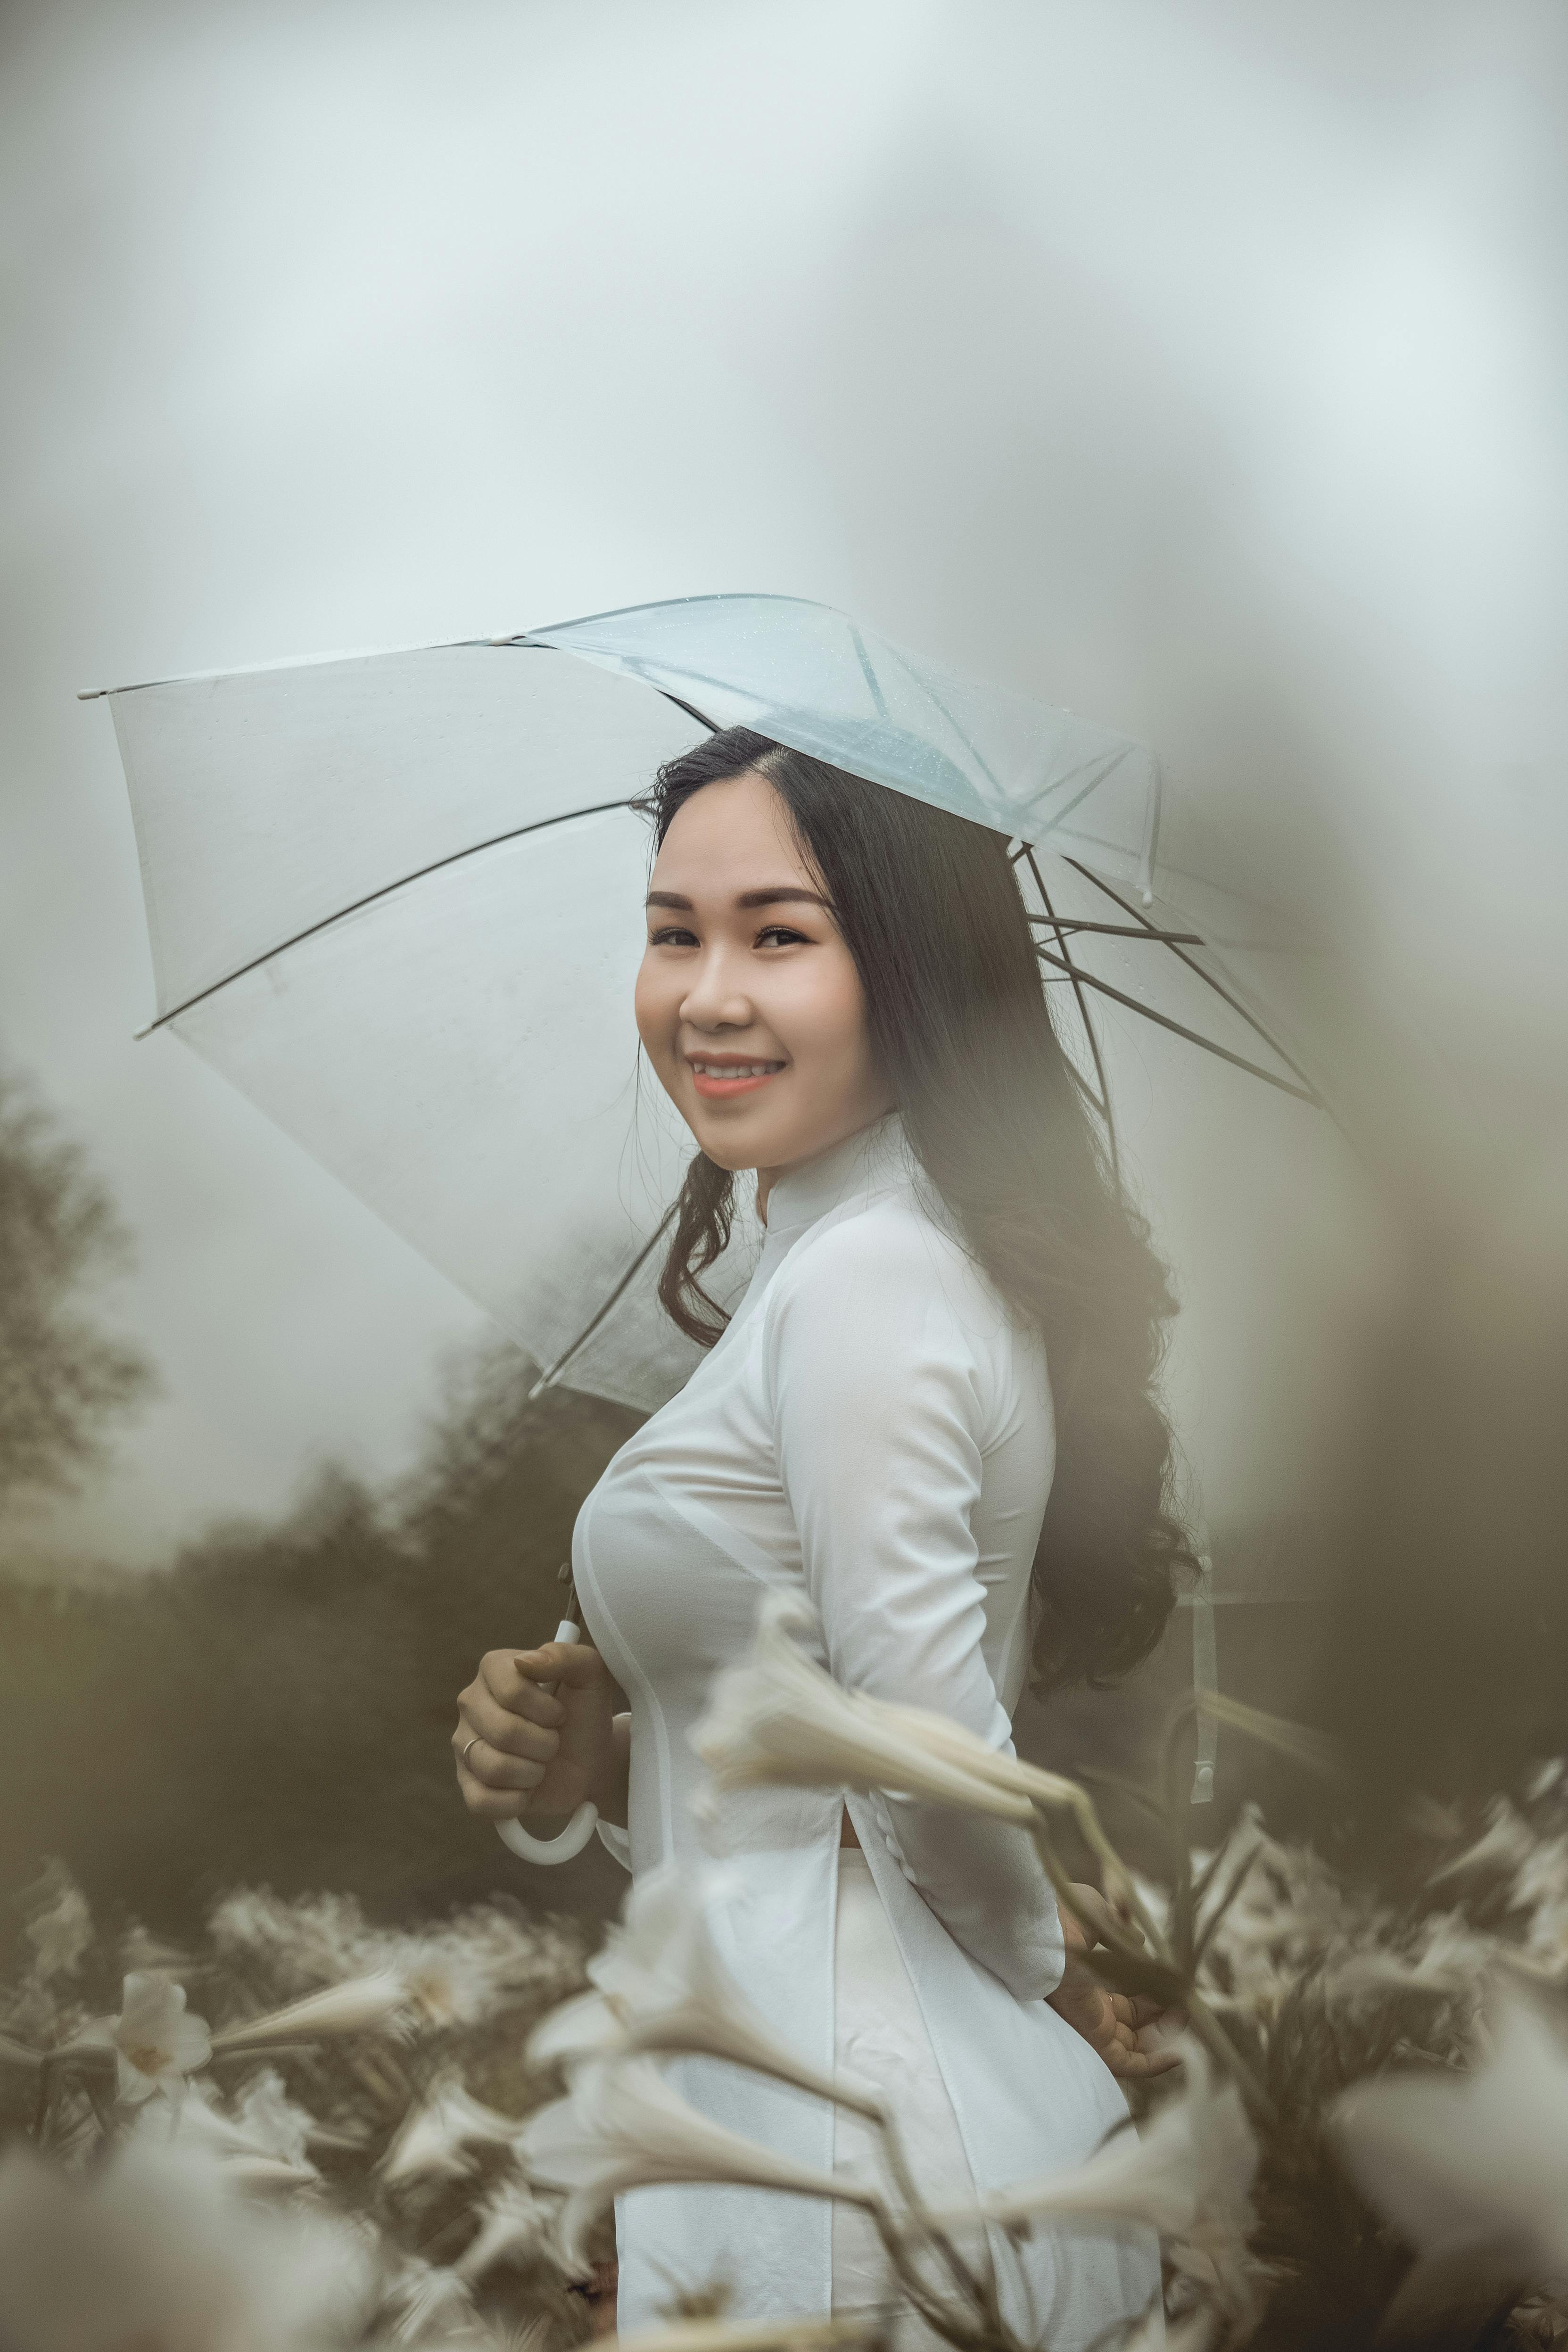 smiling woman wearing white long sleeved dress holding white umbrella